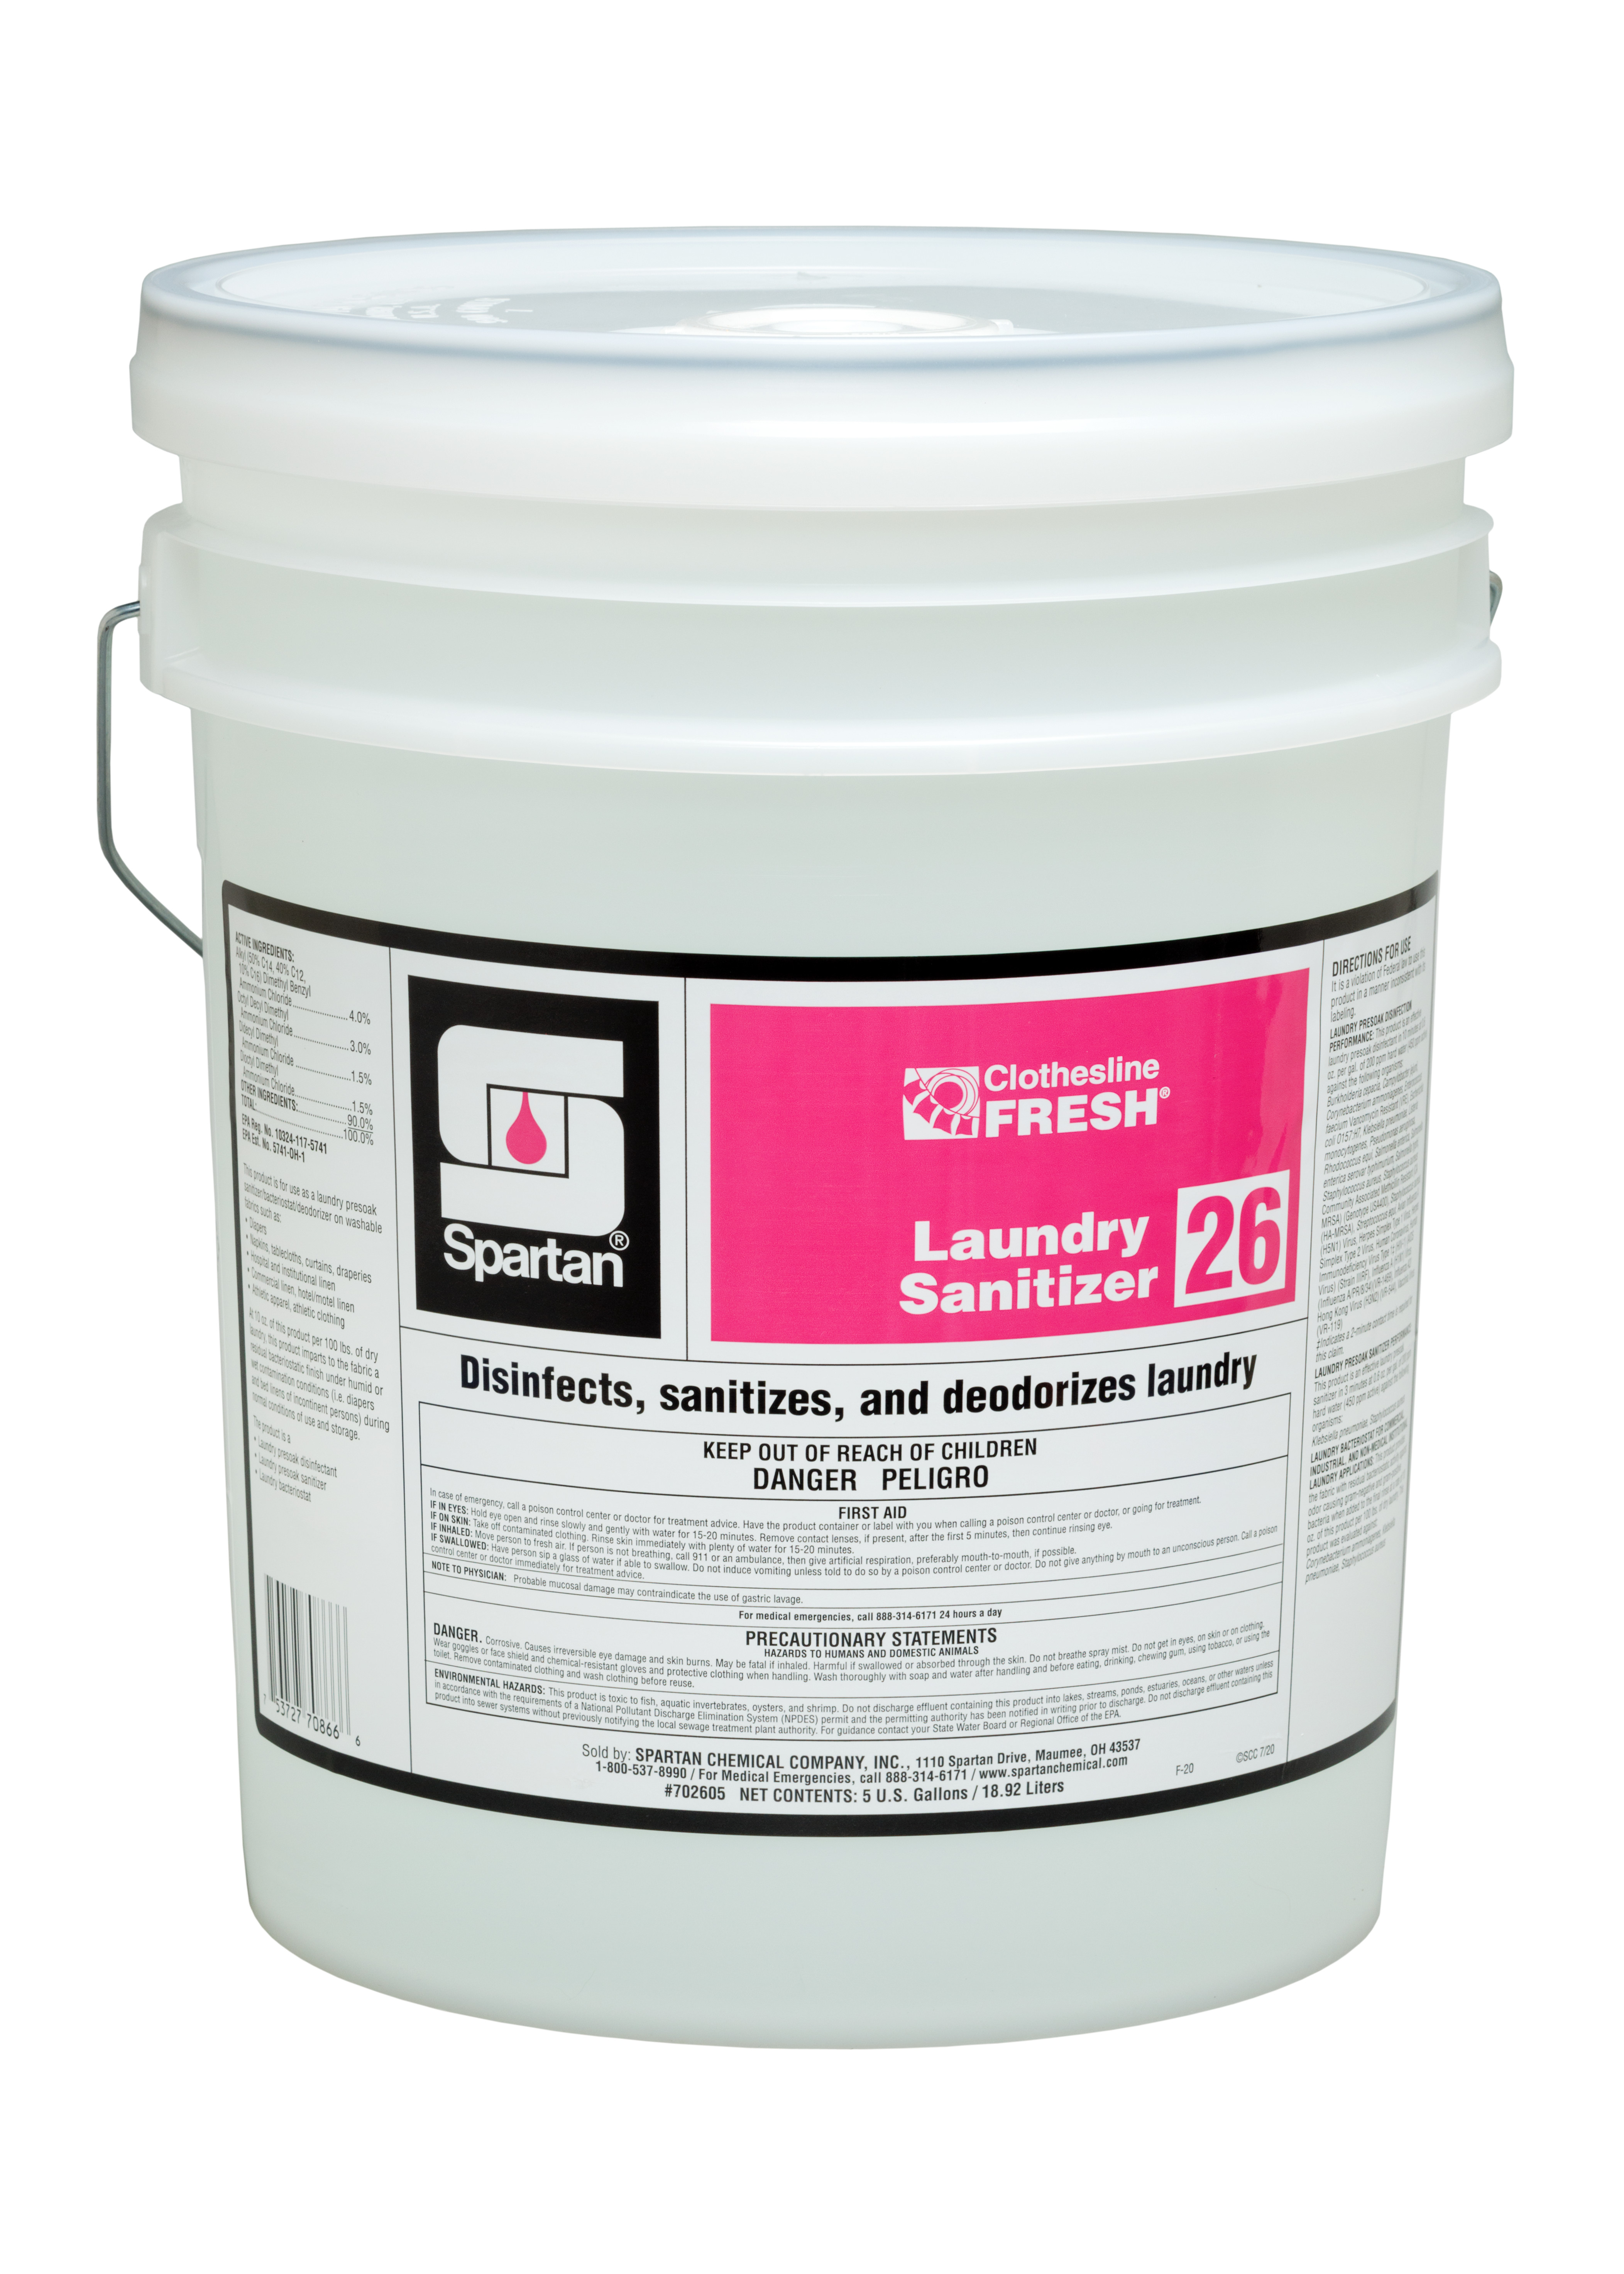 Spartan Chemical Company Clothesline Fresh Laundry Sanitizer 26, 5 gallon pail